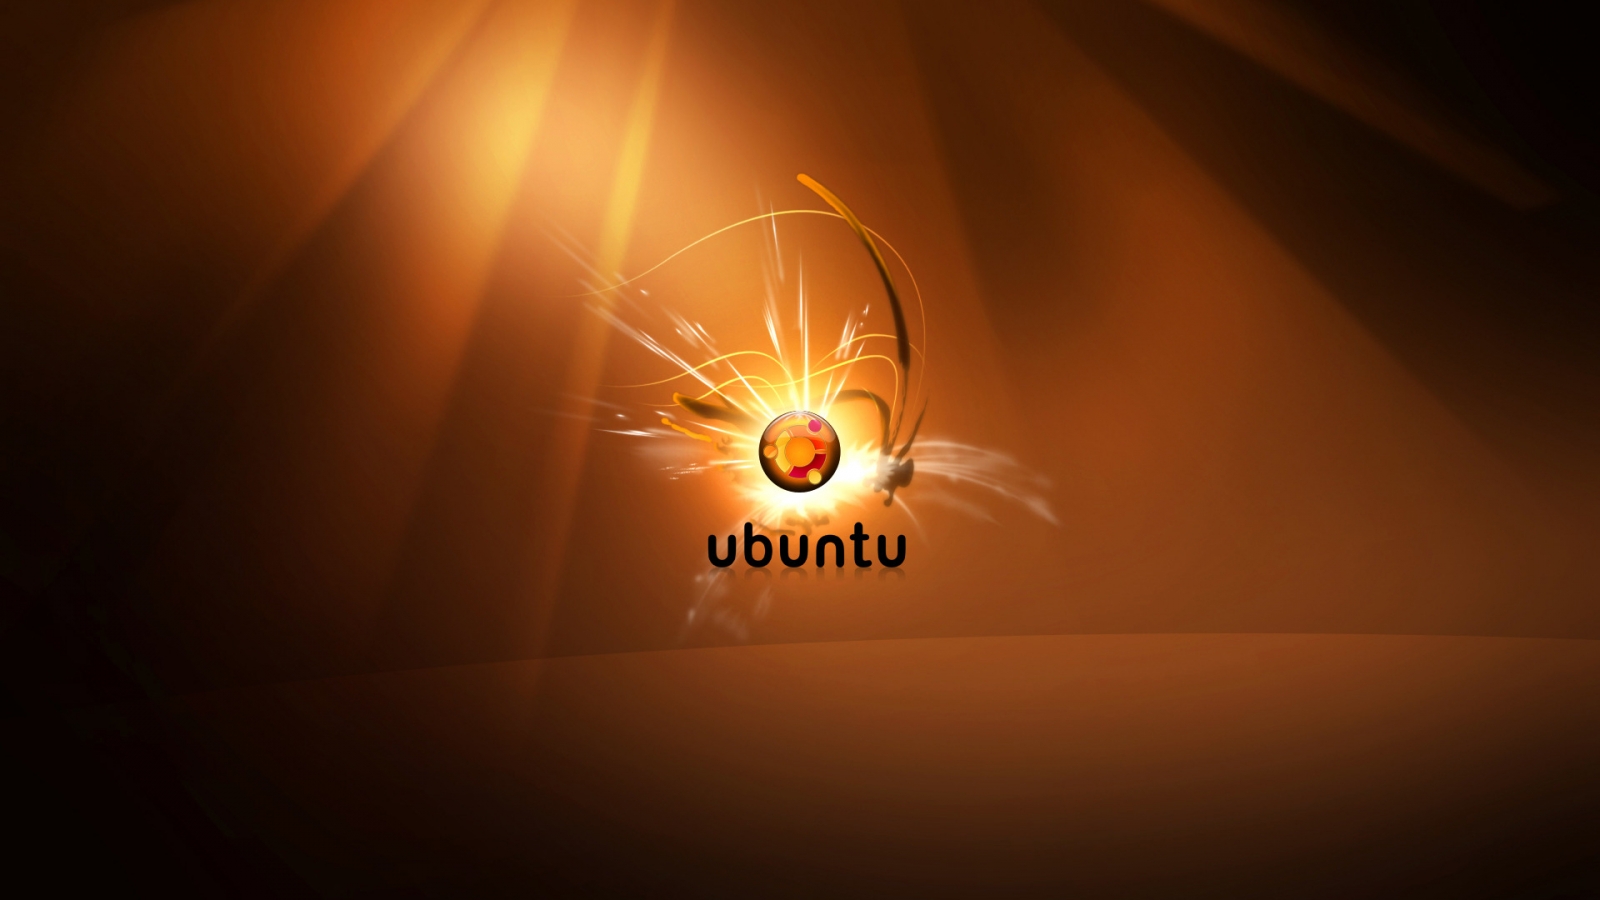 Creative Ubuntu Design for 1600 x 900 HDTV resolution